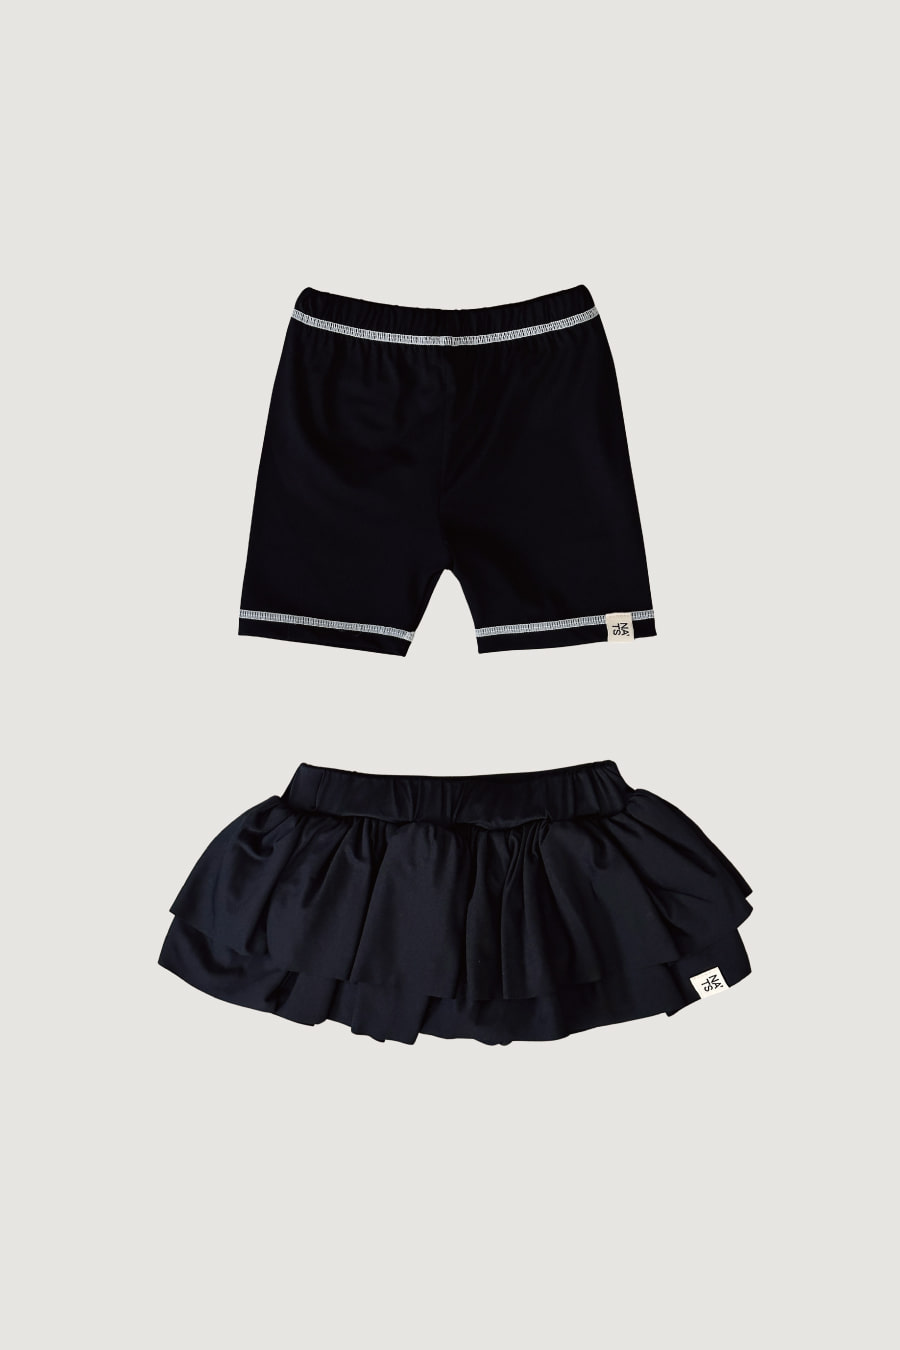 Dalmatian Swim shorts &amp; skirt